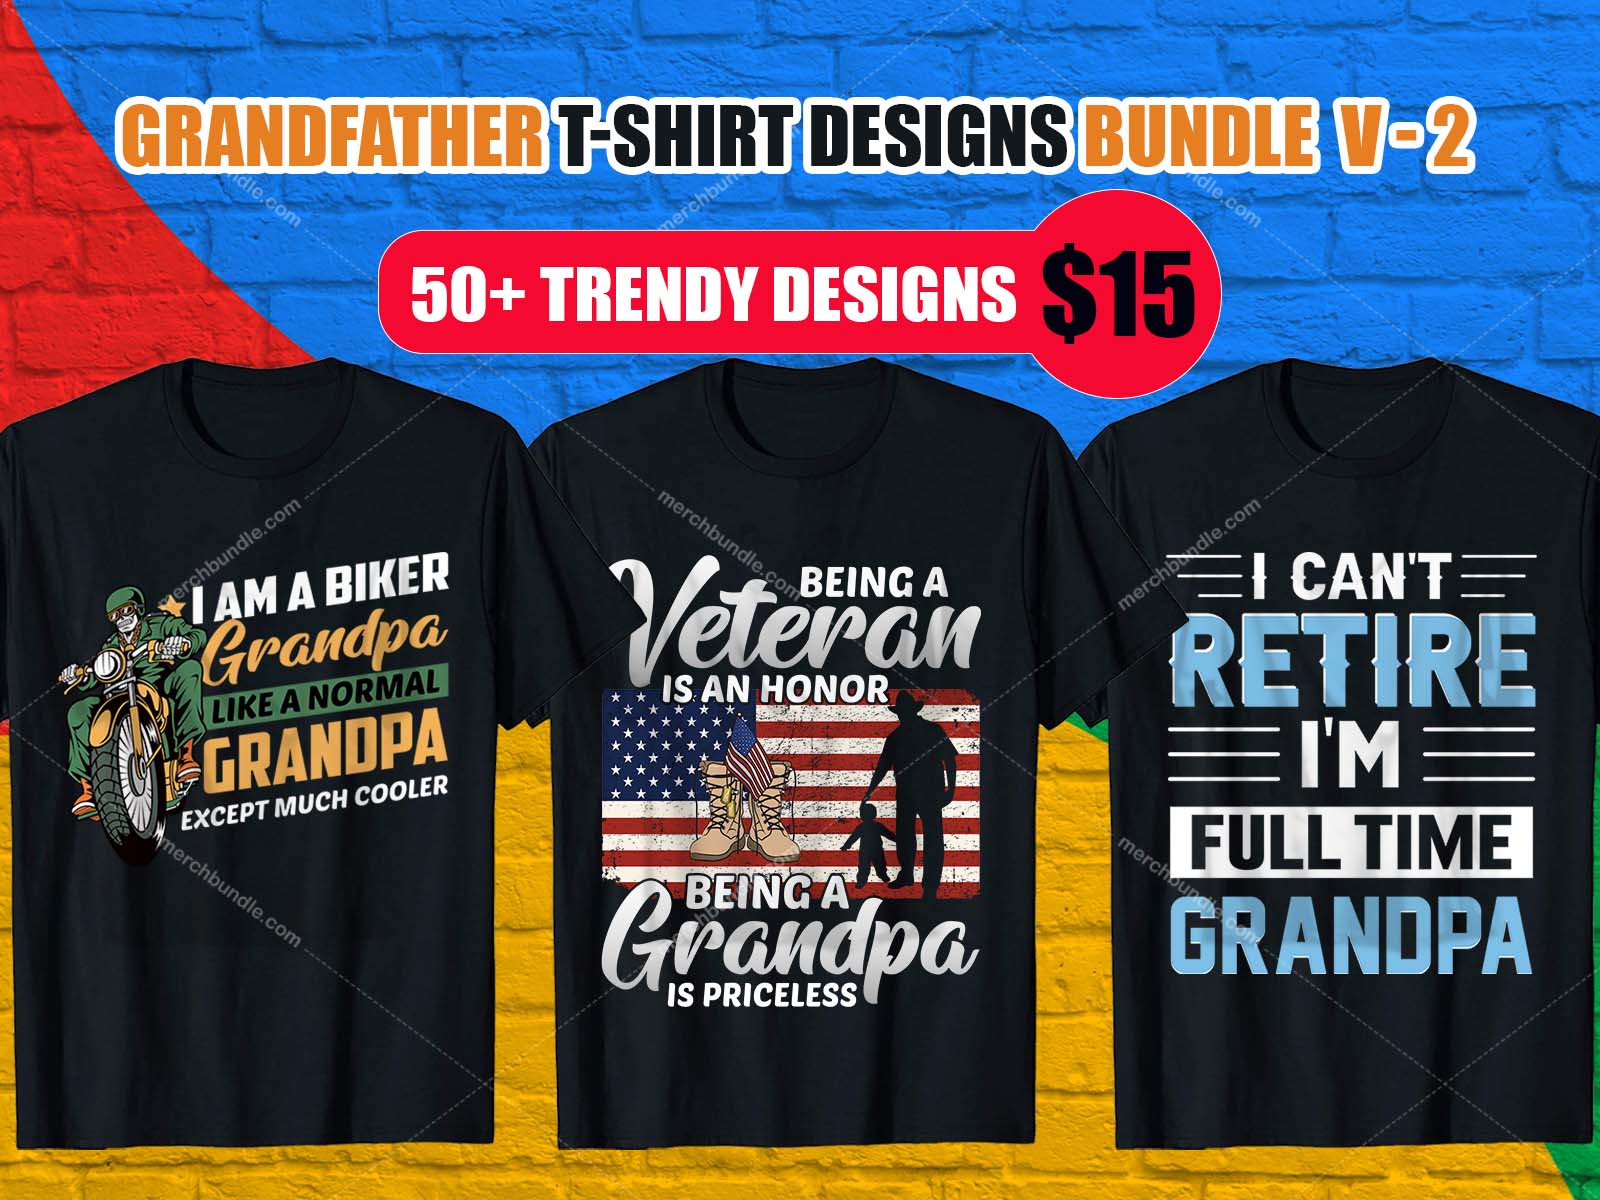 GrandFather TShirt Design Bundle